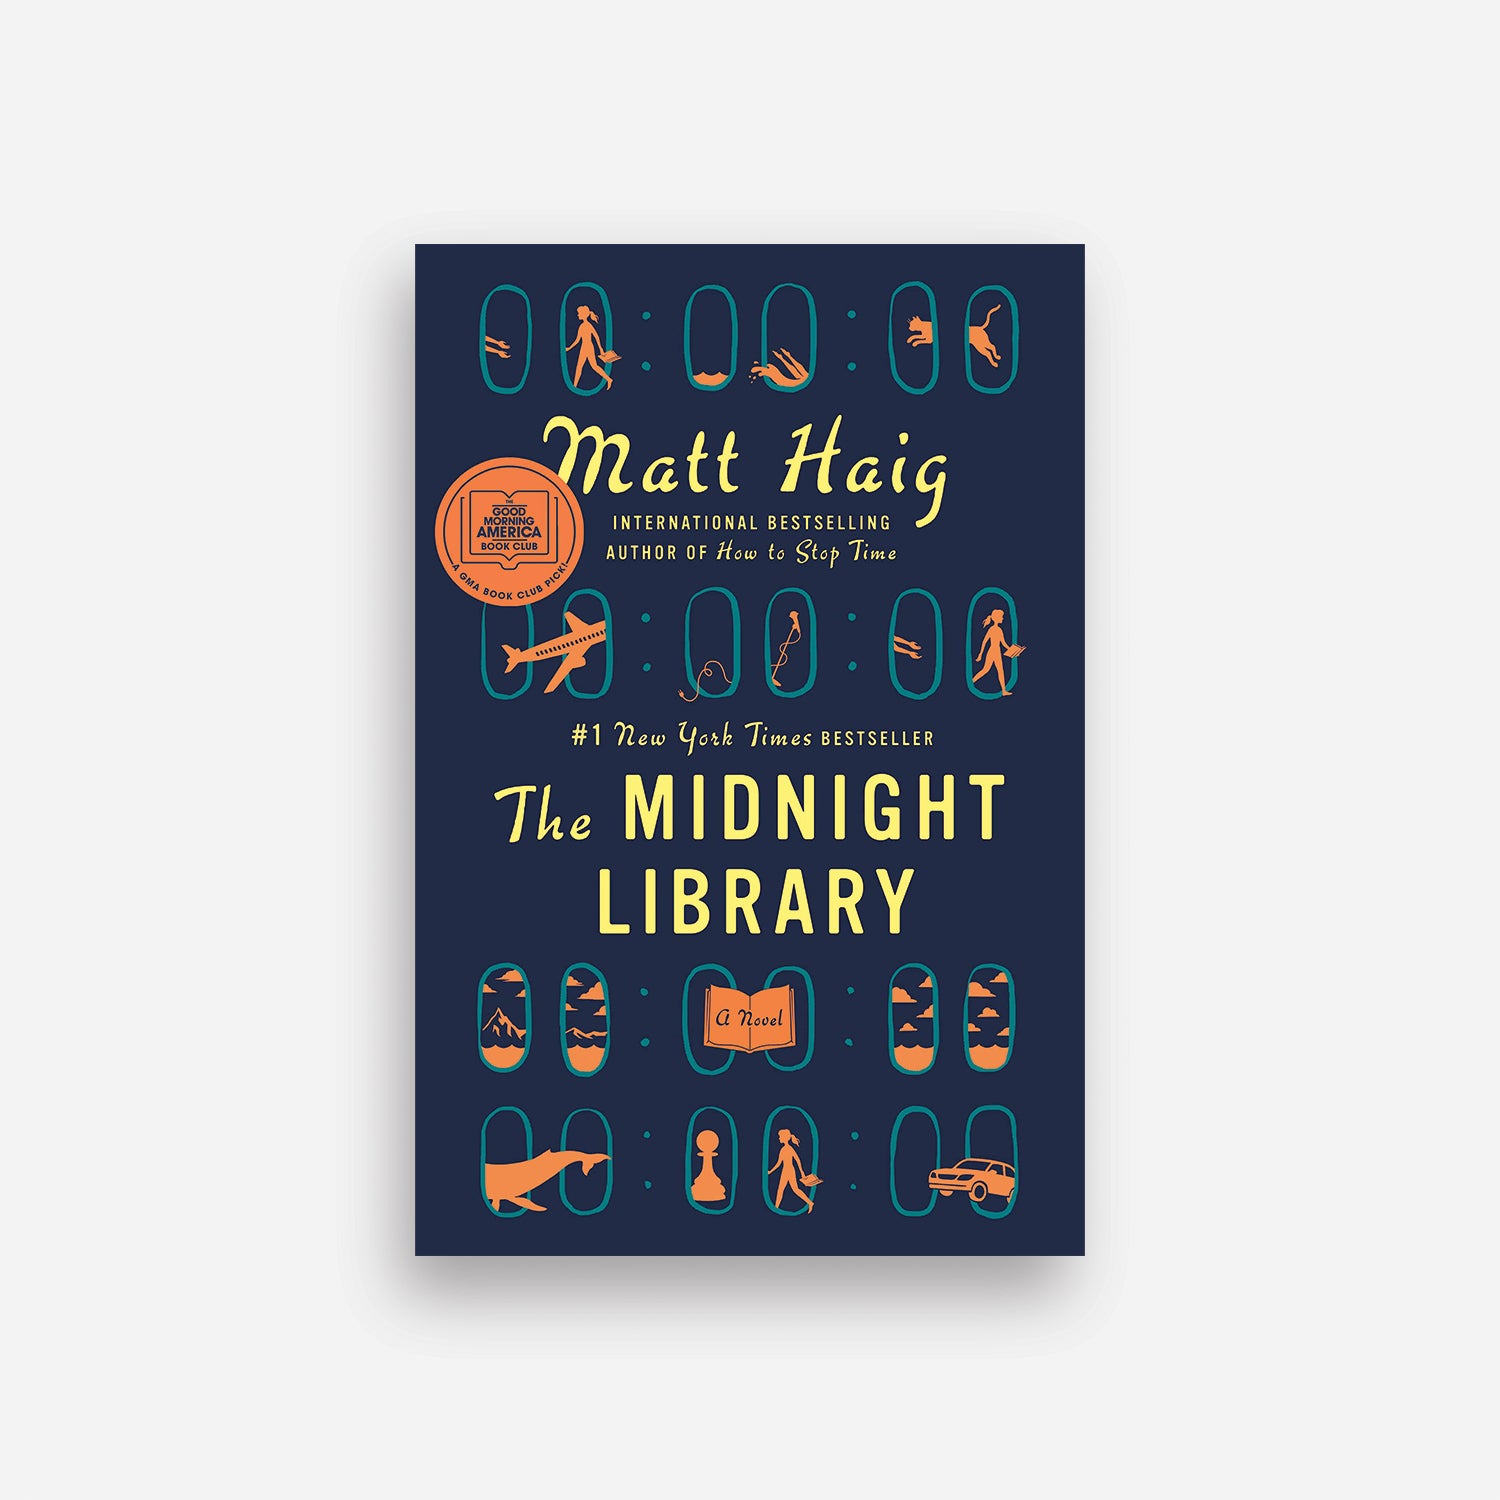 The Midnight Library by Matt Haig book cover